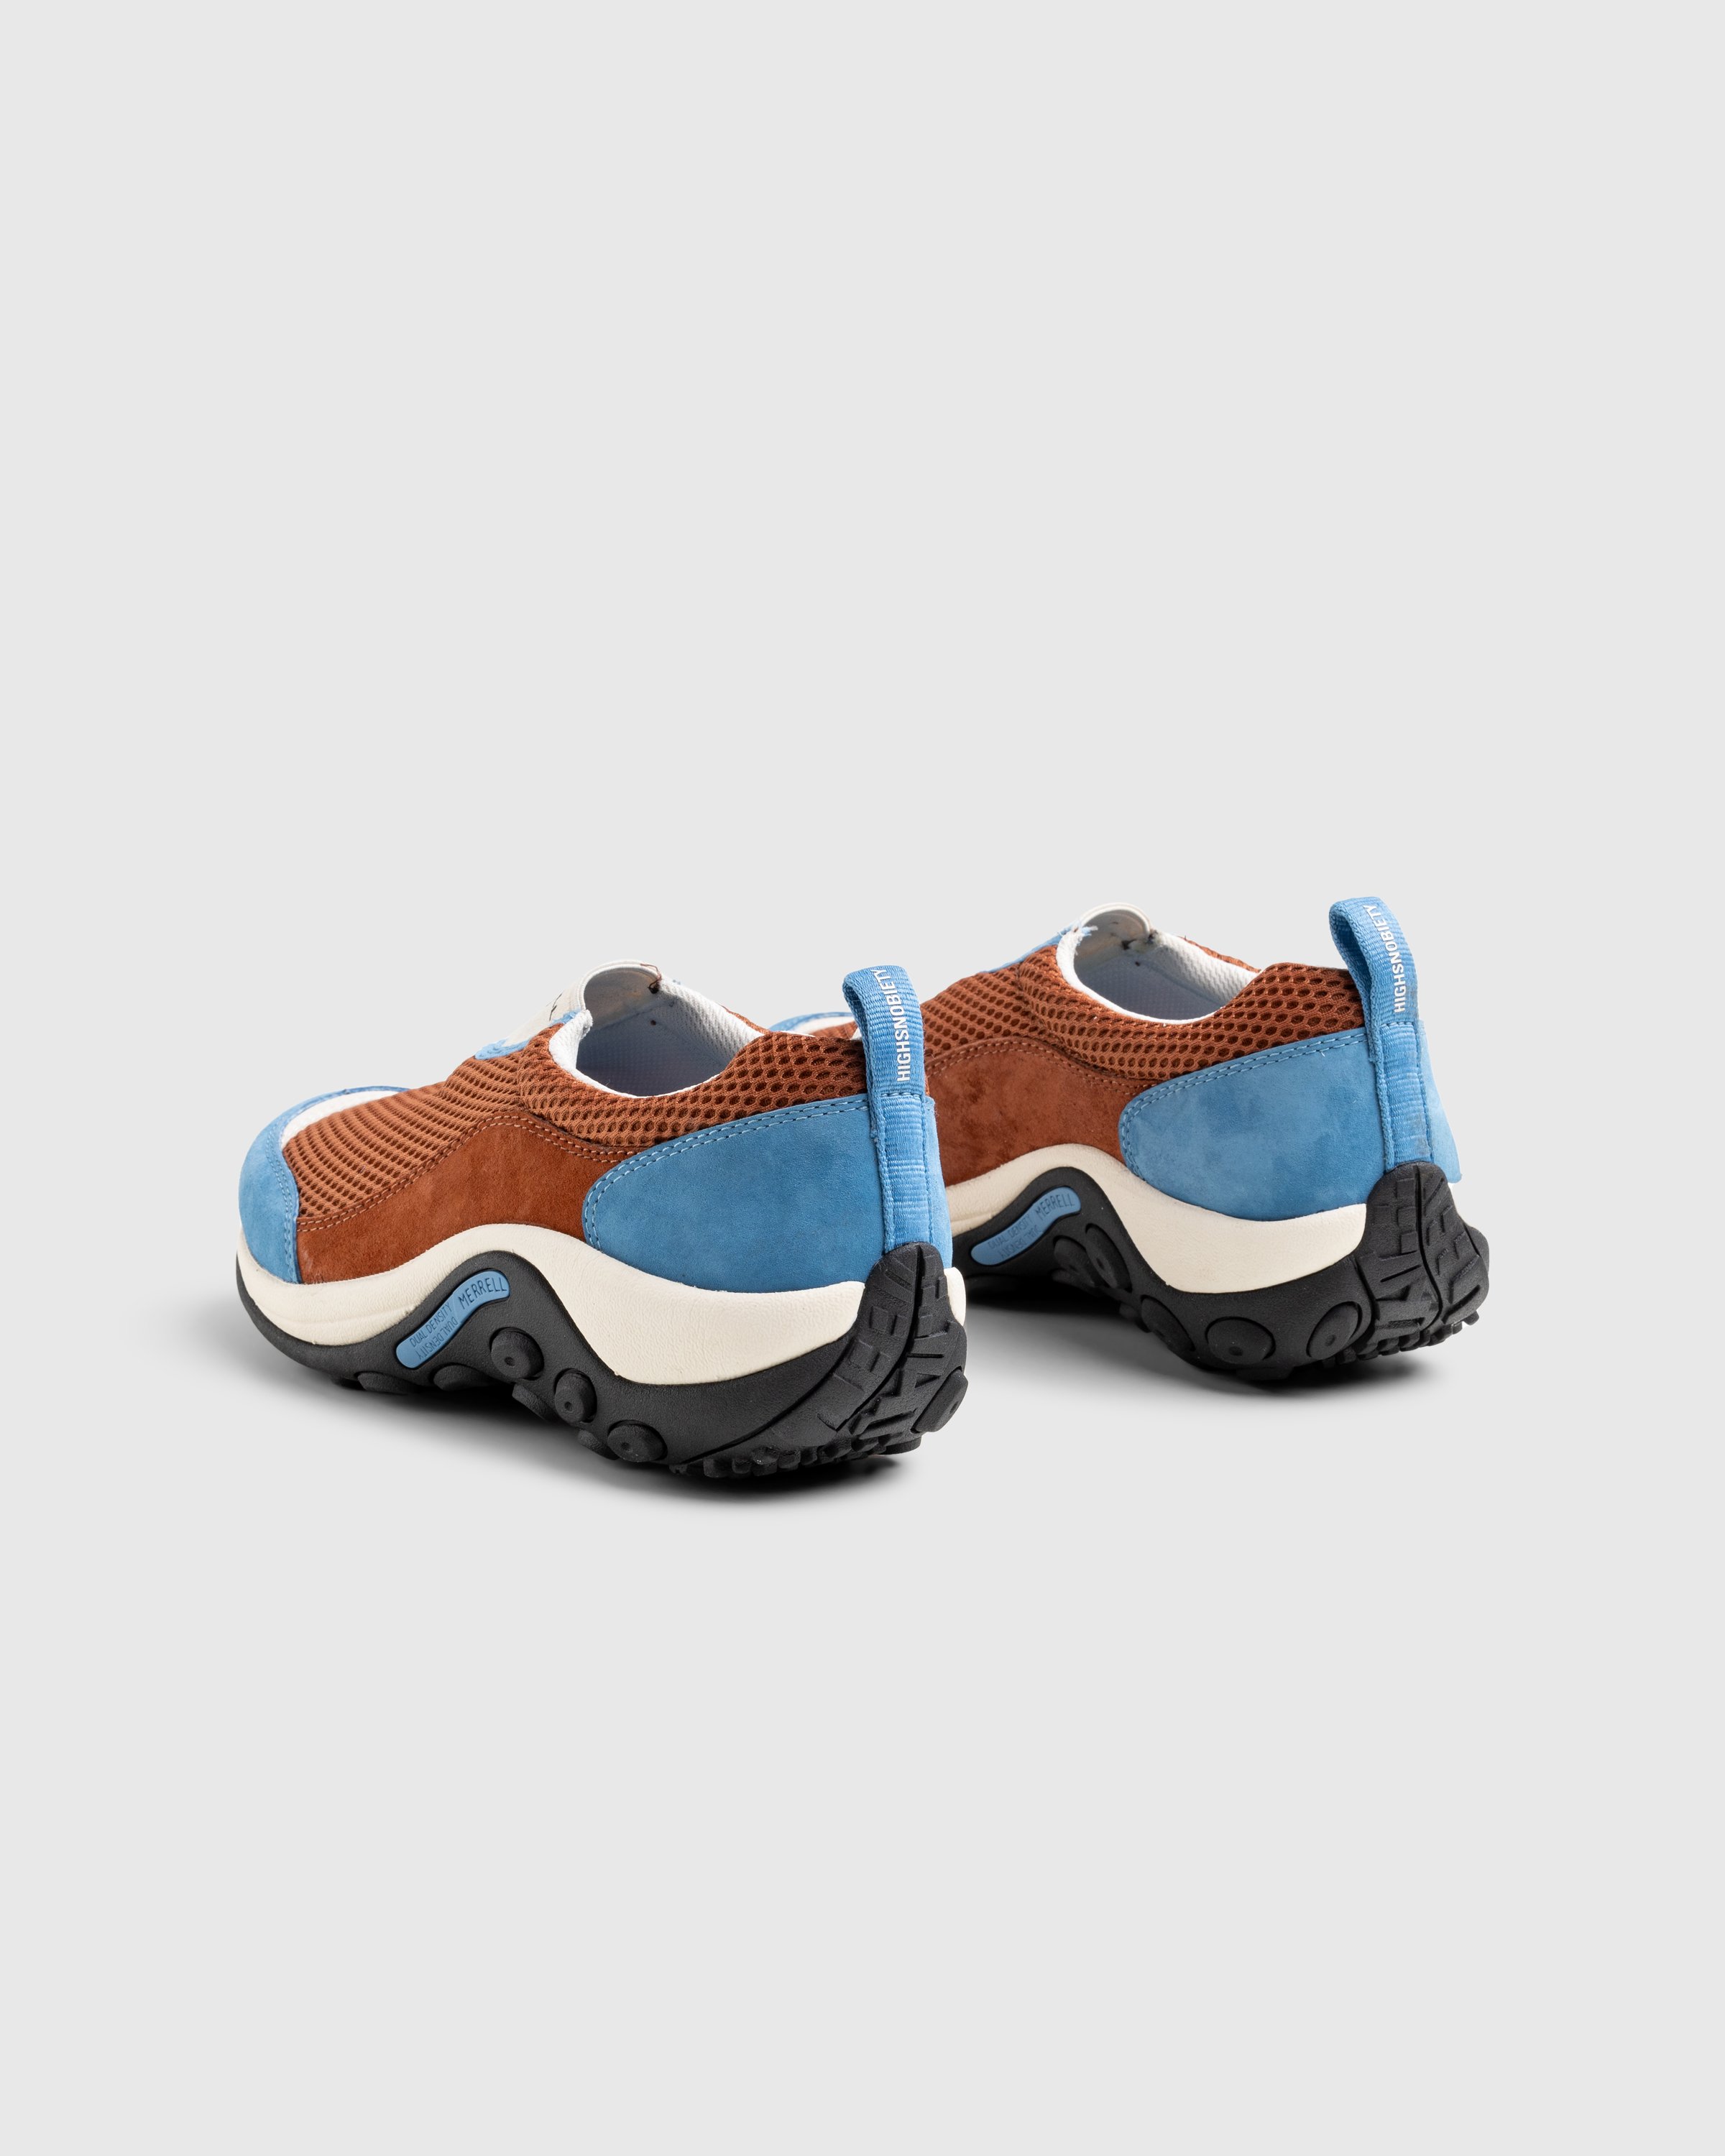 Merrell x Highsnobiety - Mens Jungle Moc Breeze Topaz - Footwear - Multi - Image 4